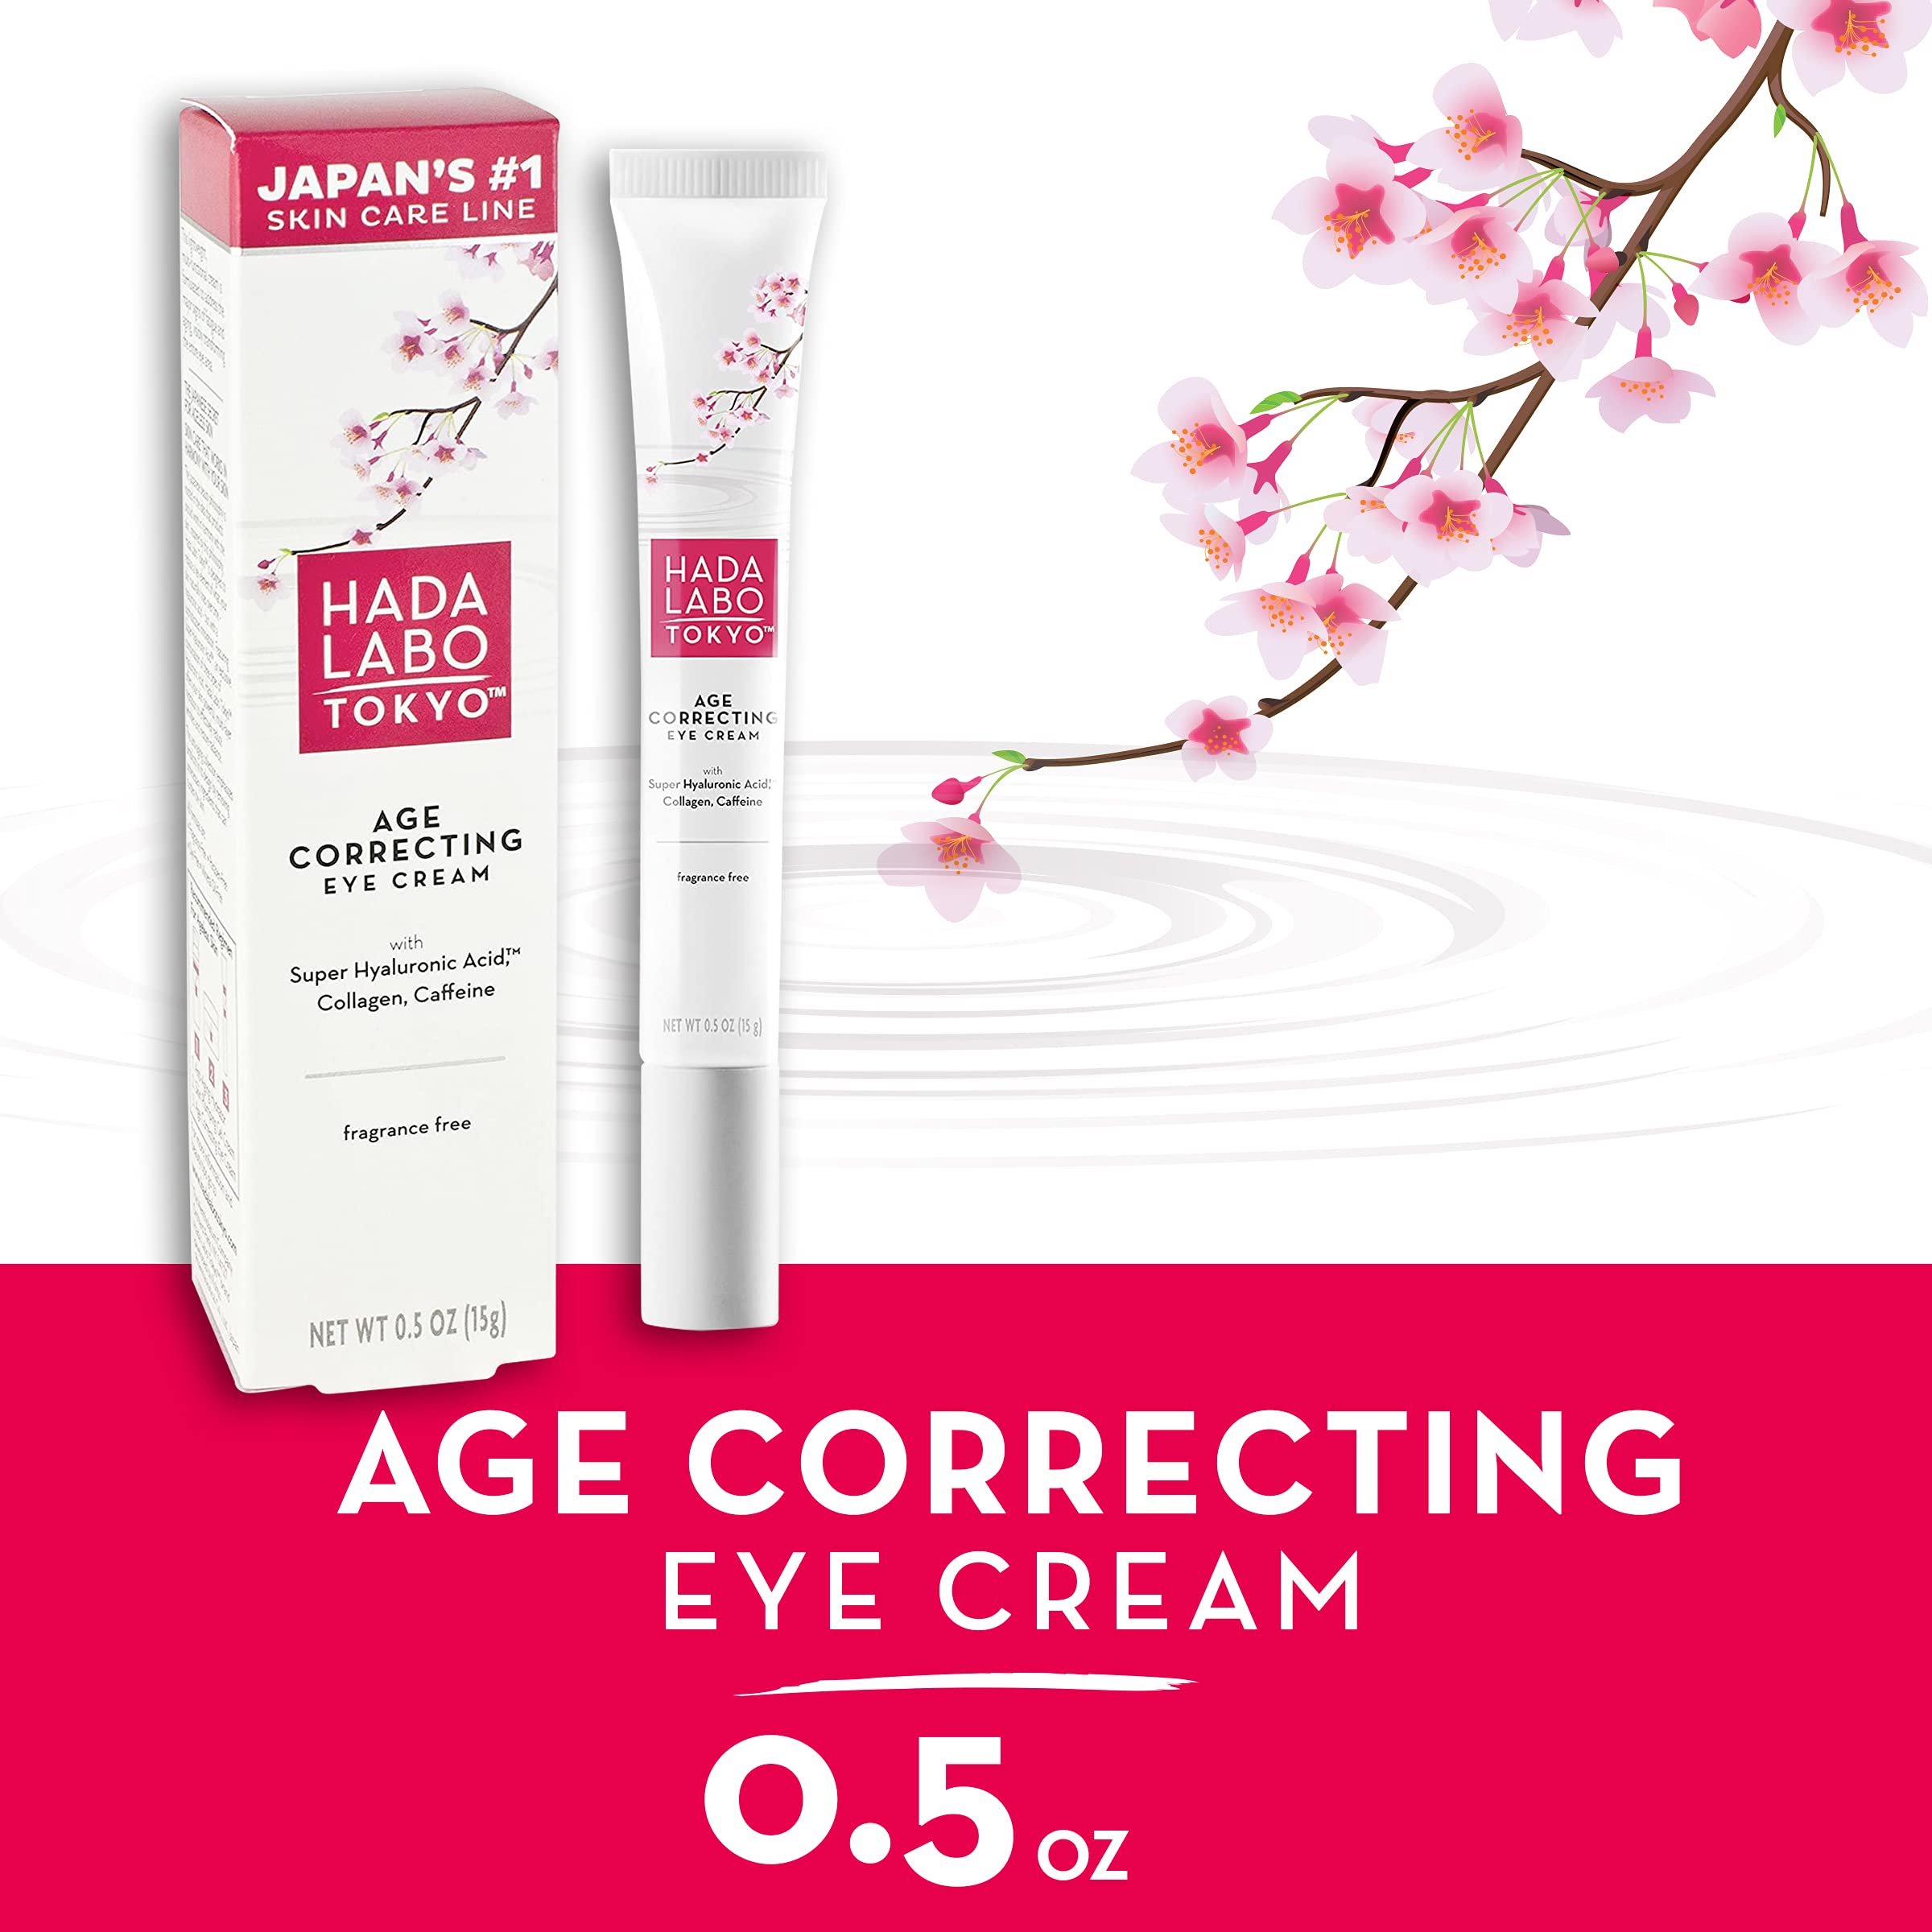 Hada Labo Tokyo Age Correcting Eye Cream, Ivory, Fragrance free, 0.5 Ounce, 1802